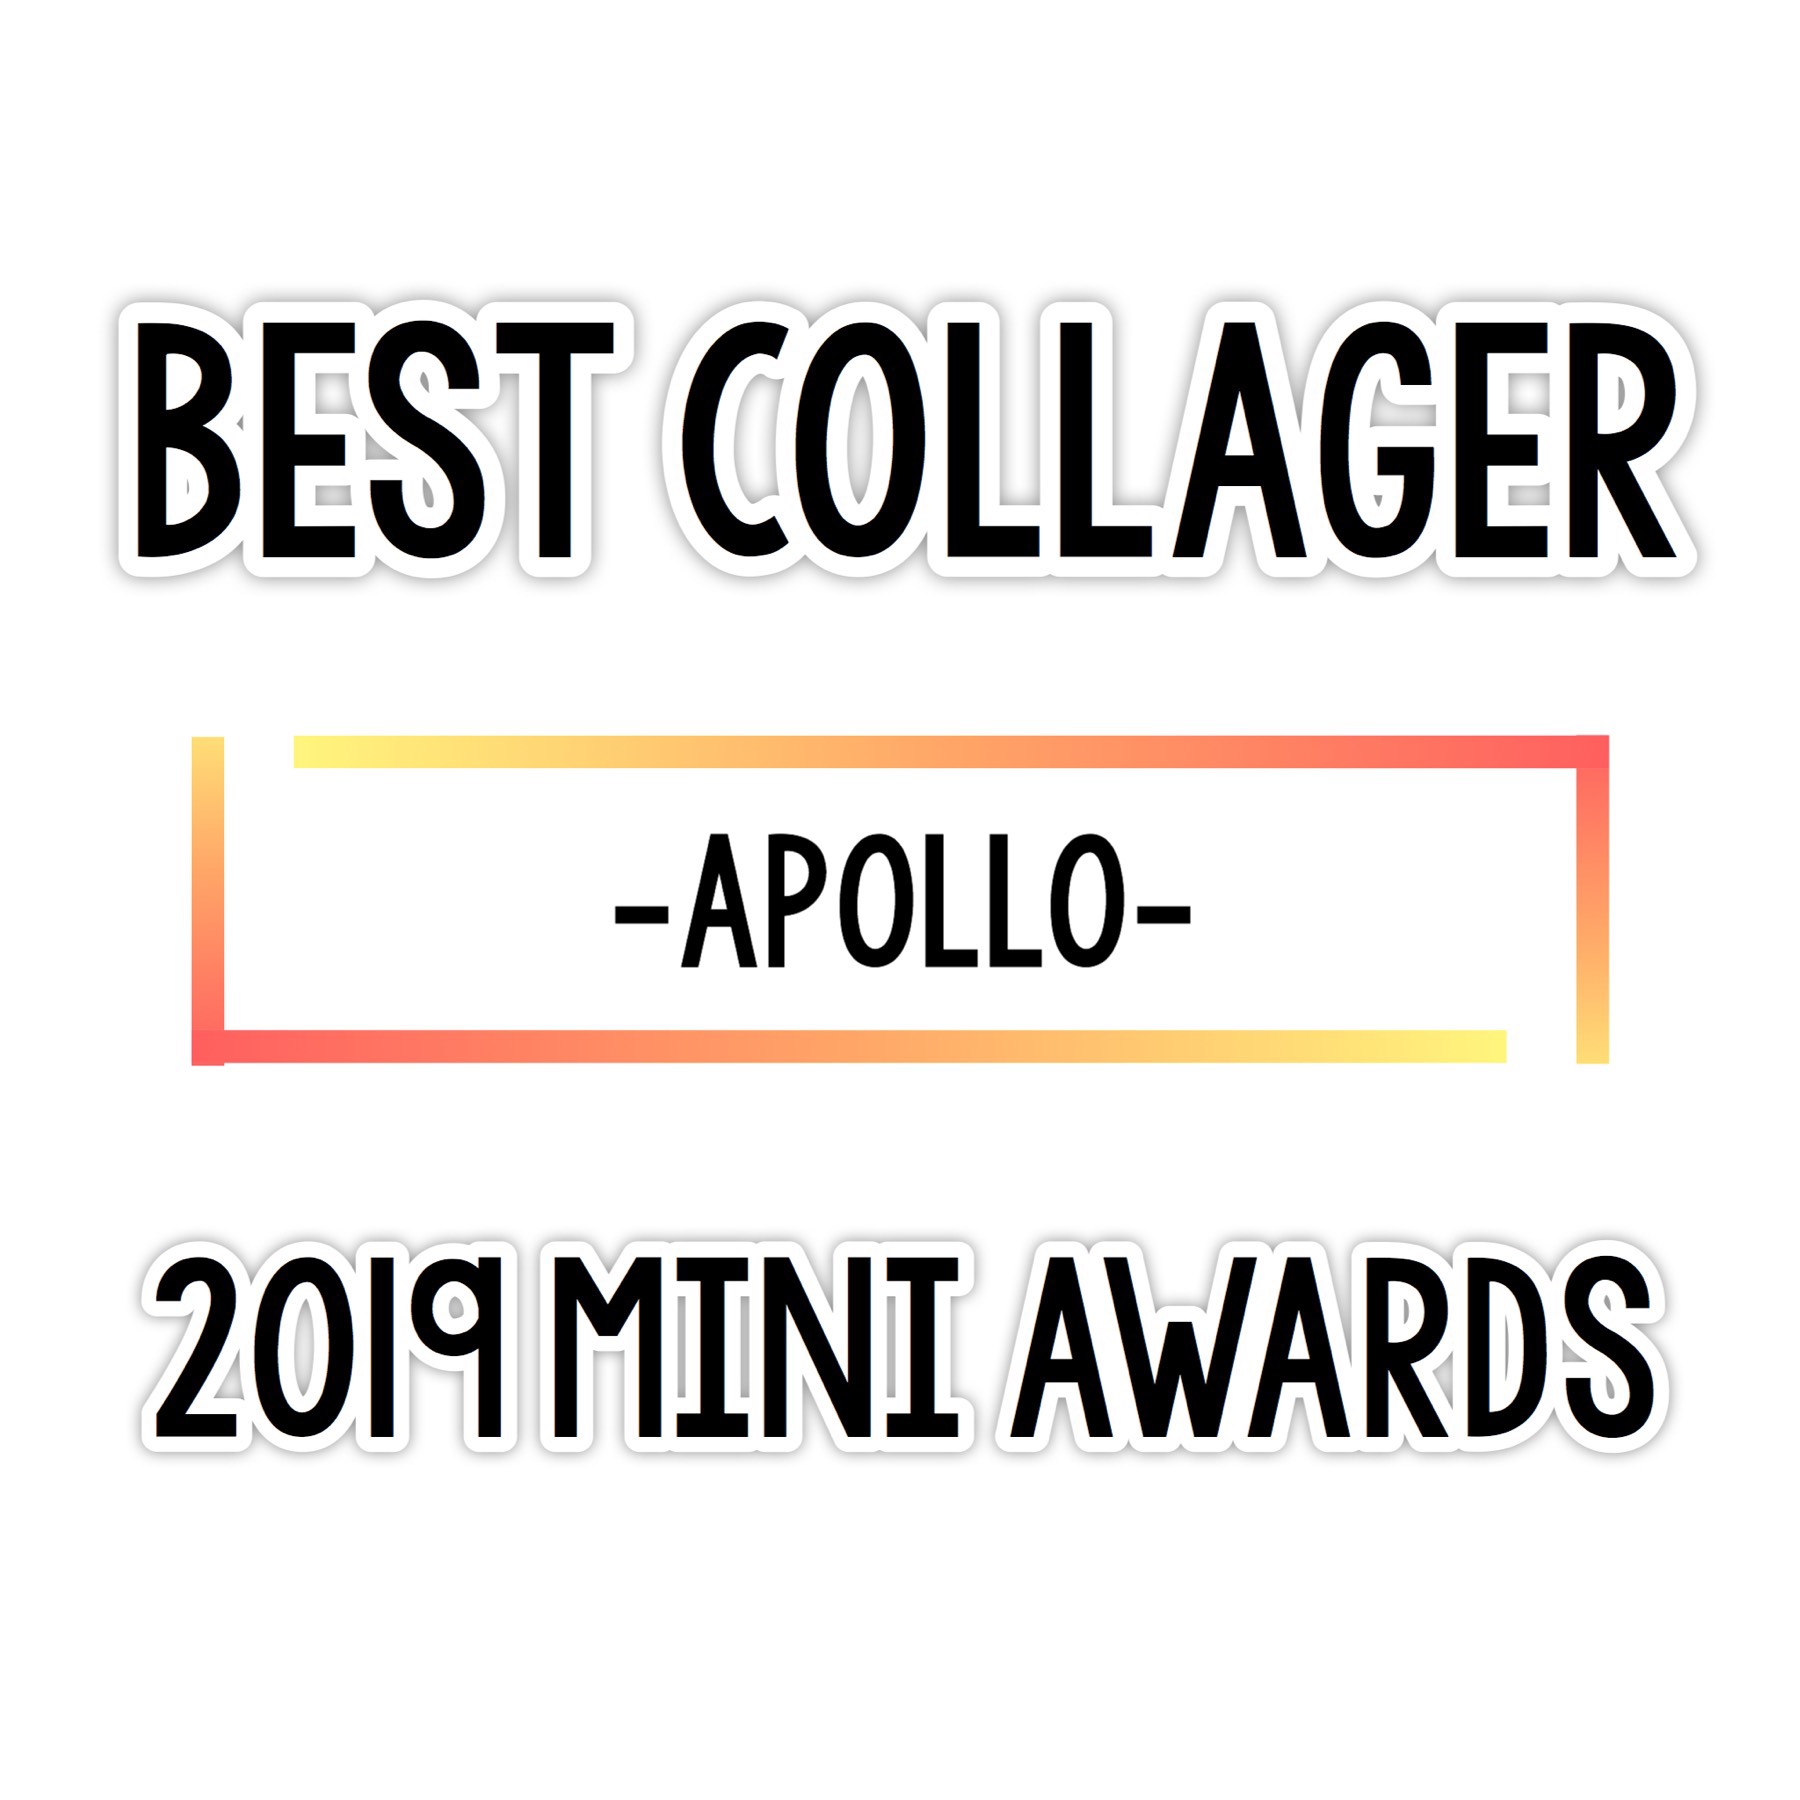 Congratulations -apollo- !